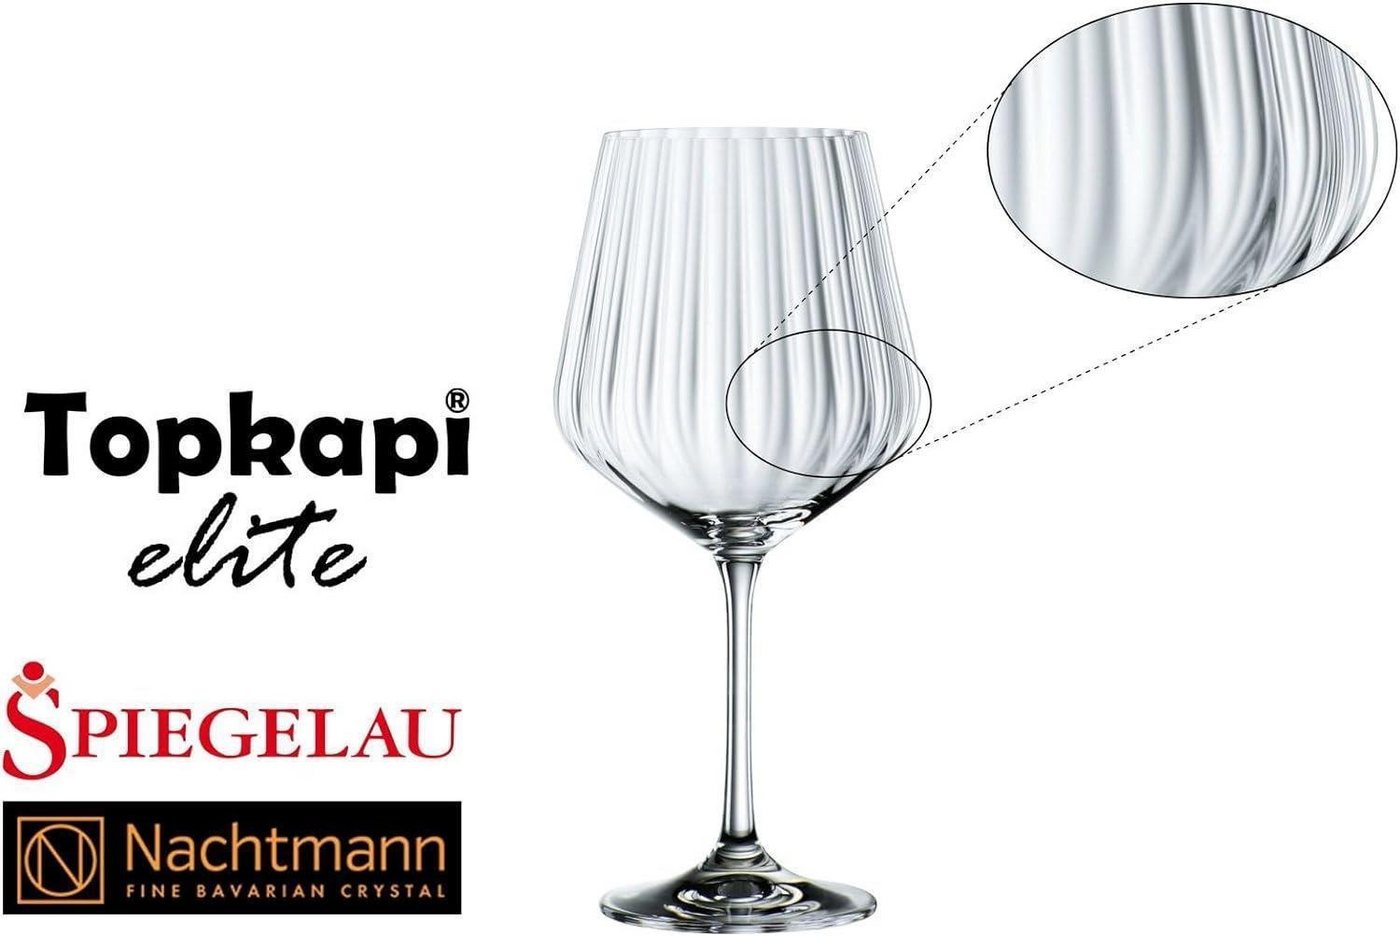 Topkapi elite Cocktailglas Topkapi elite Aperol Spritz Glas Rosterberg I 4 Stück, Kristallglas von Topkapi elite